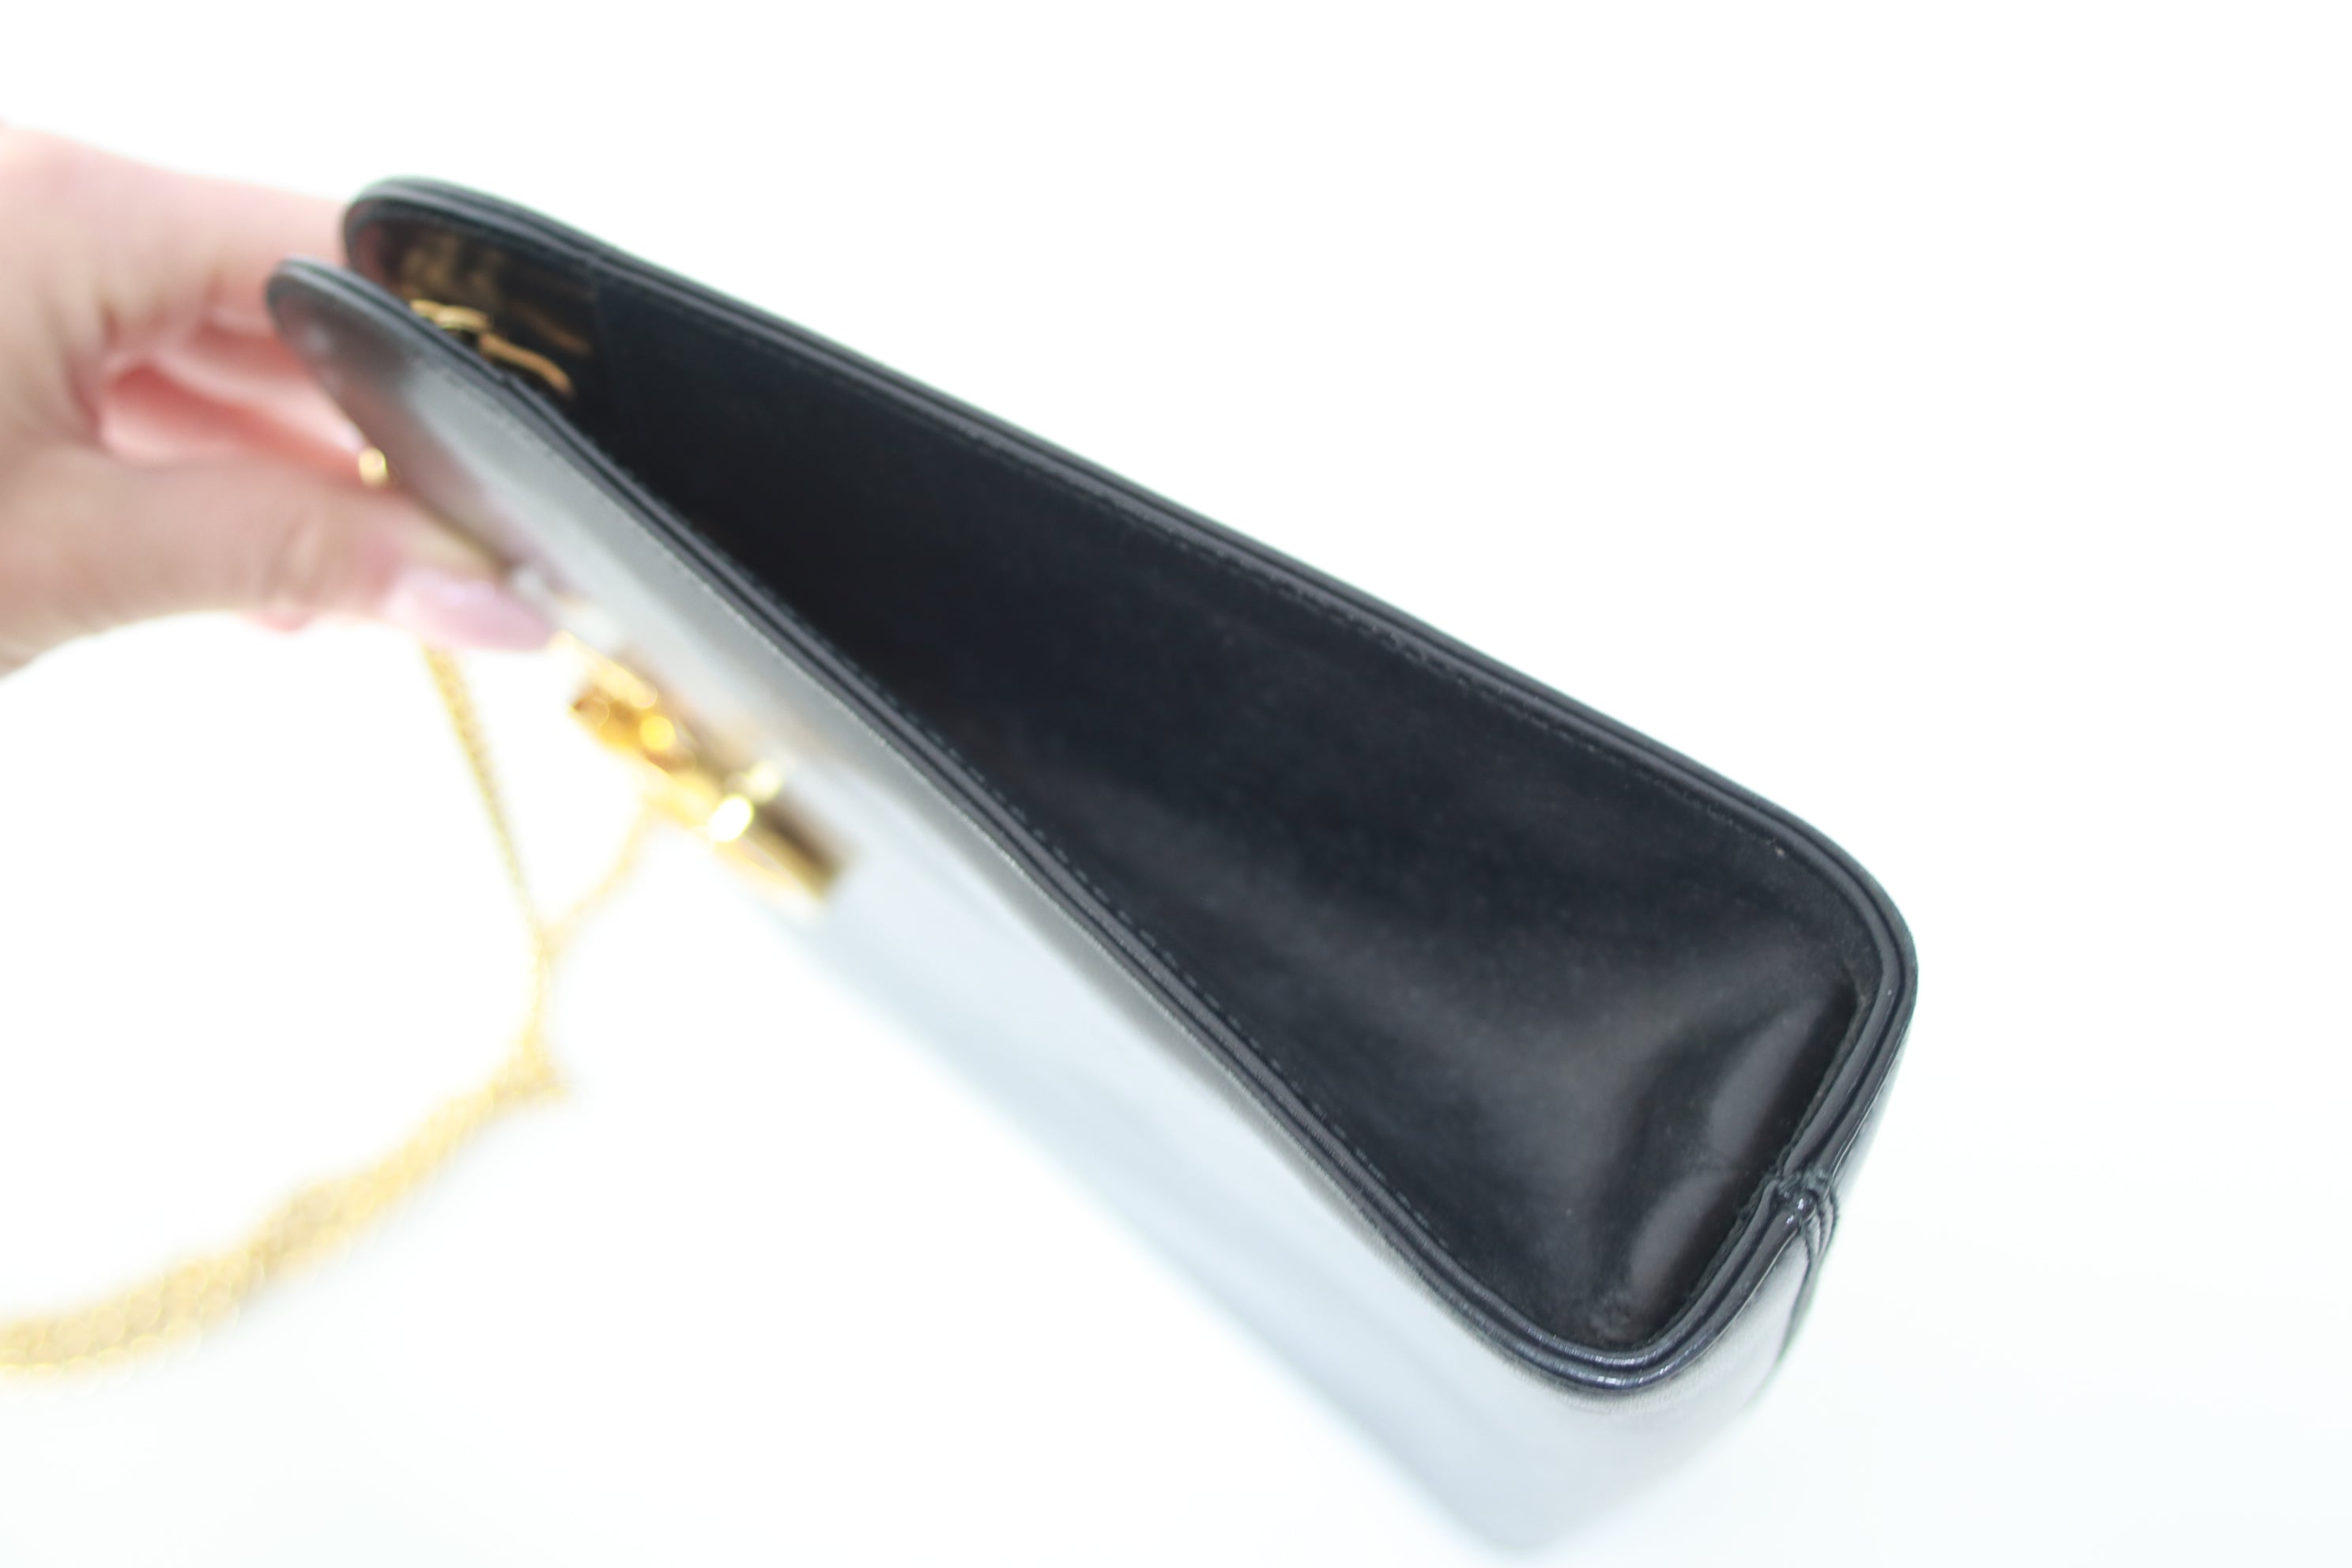 Ferragamo Chain Shoulder Bag Black Used (6918)